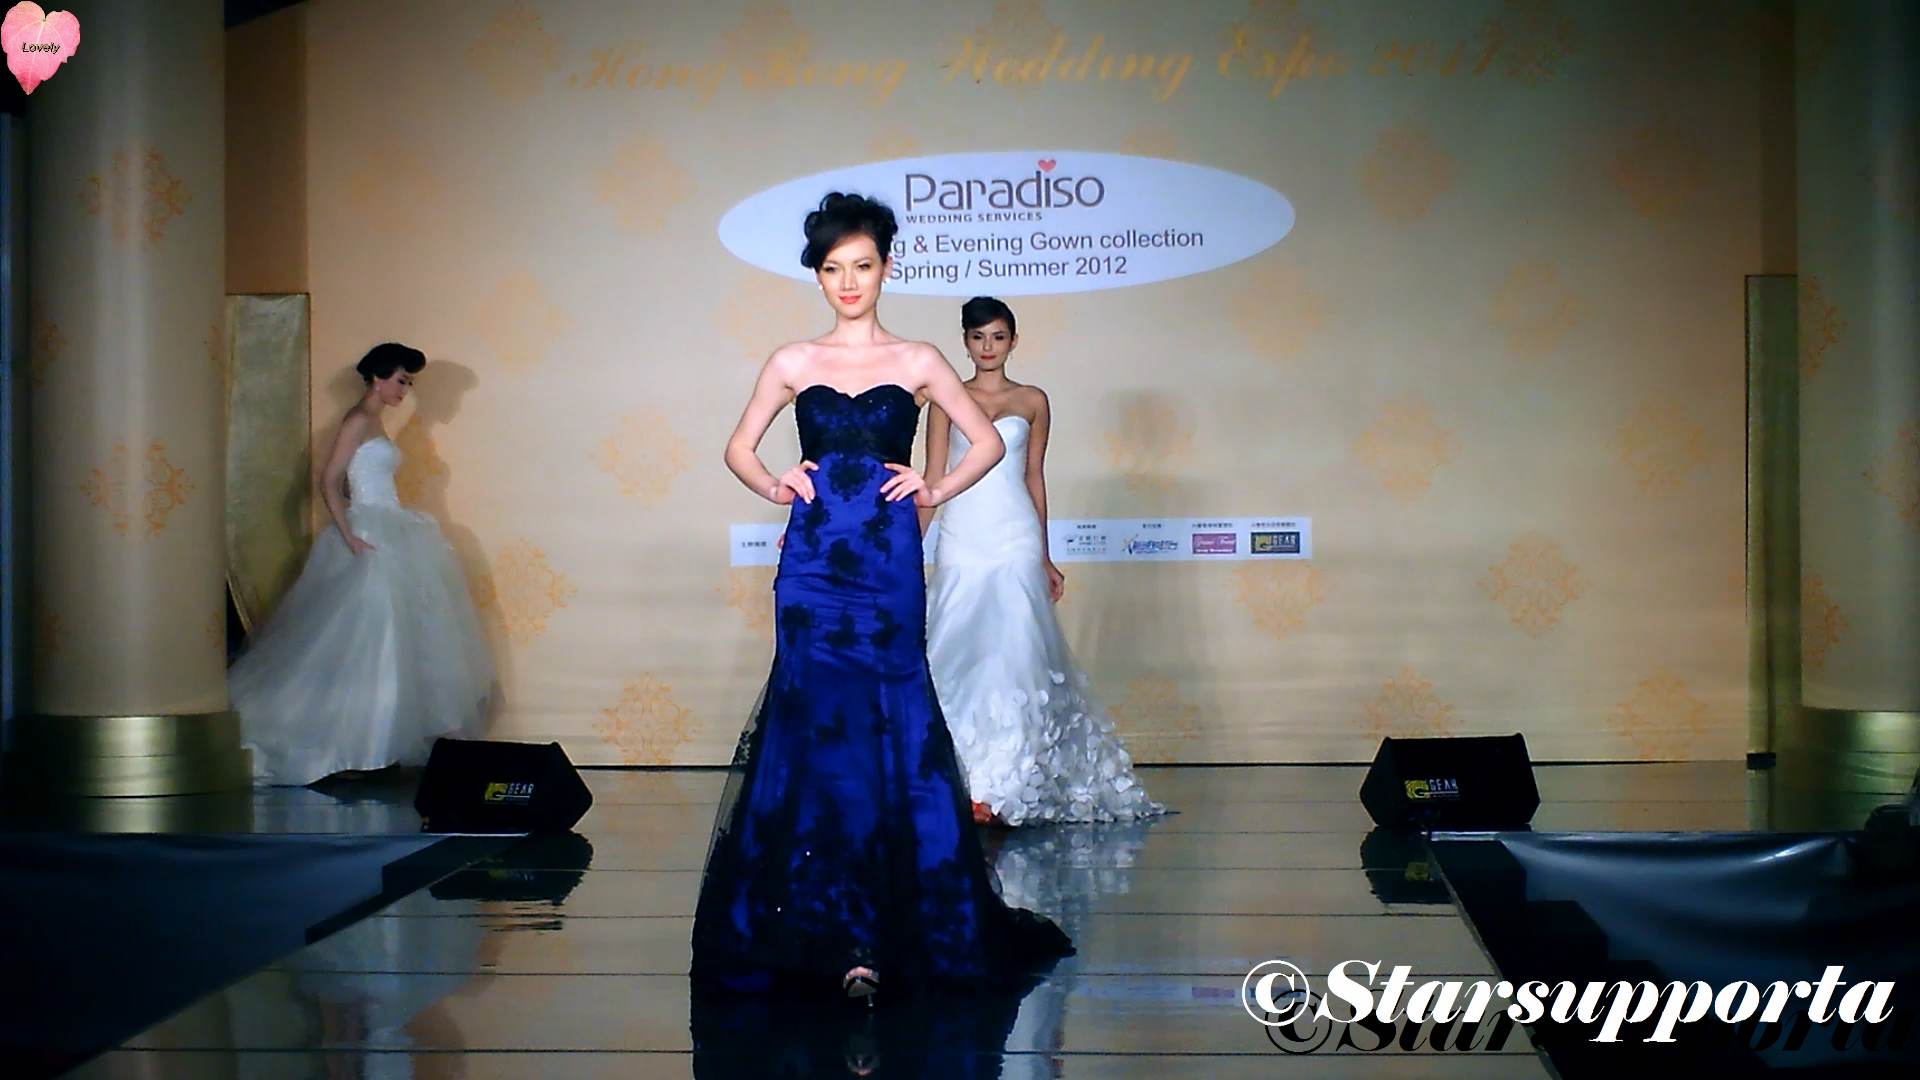 20111105 Hong Kong Wedding Expo - Paradiso: Wedding & Evening Gown collection Spring / Summer 2012 @ 香港會議展覽中心 HKCEC (video)